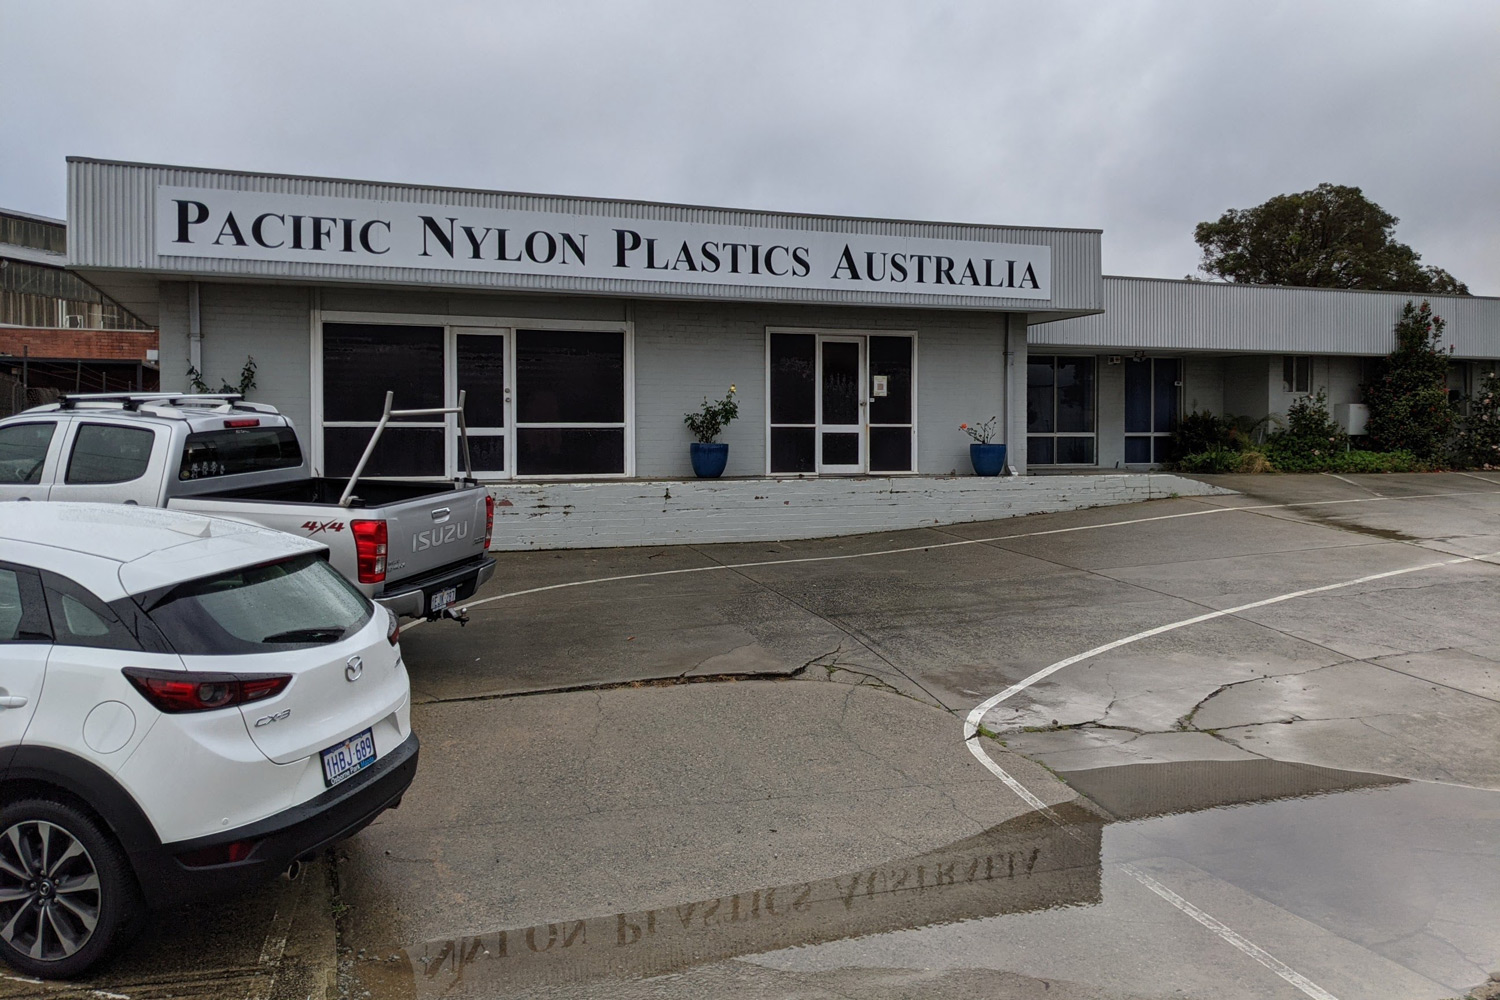 Pacific Nylon Plastics Australia premises in Western Australia